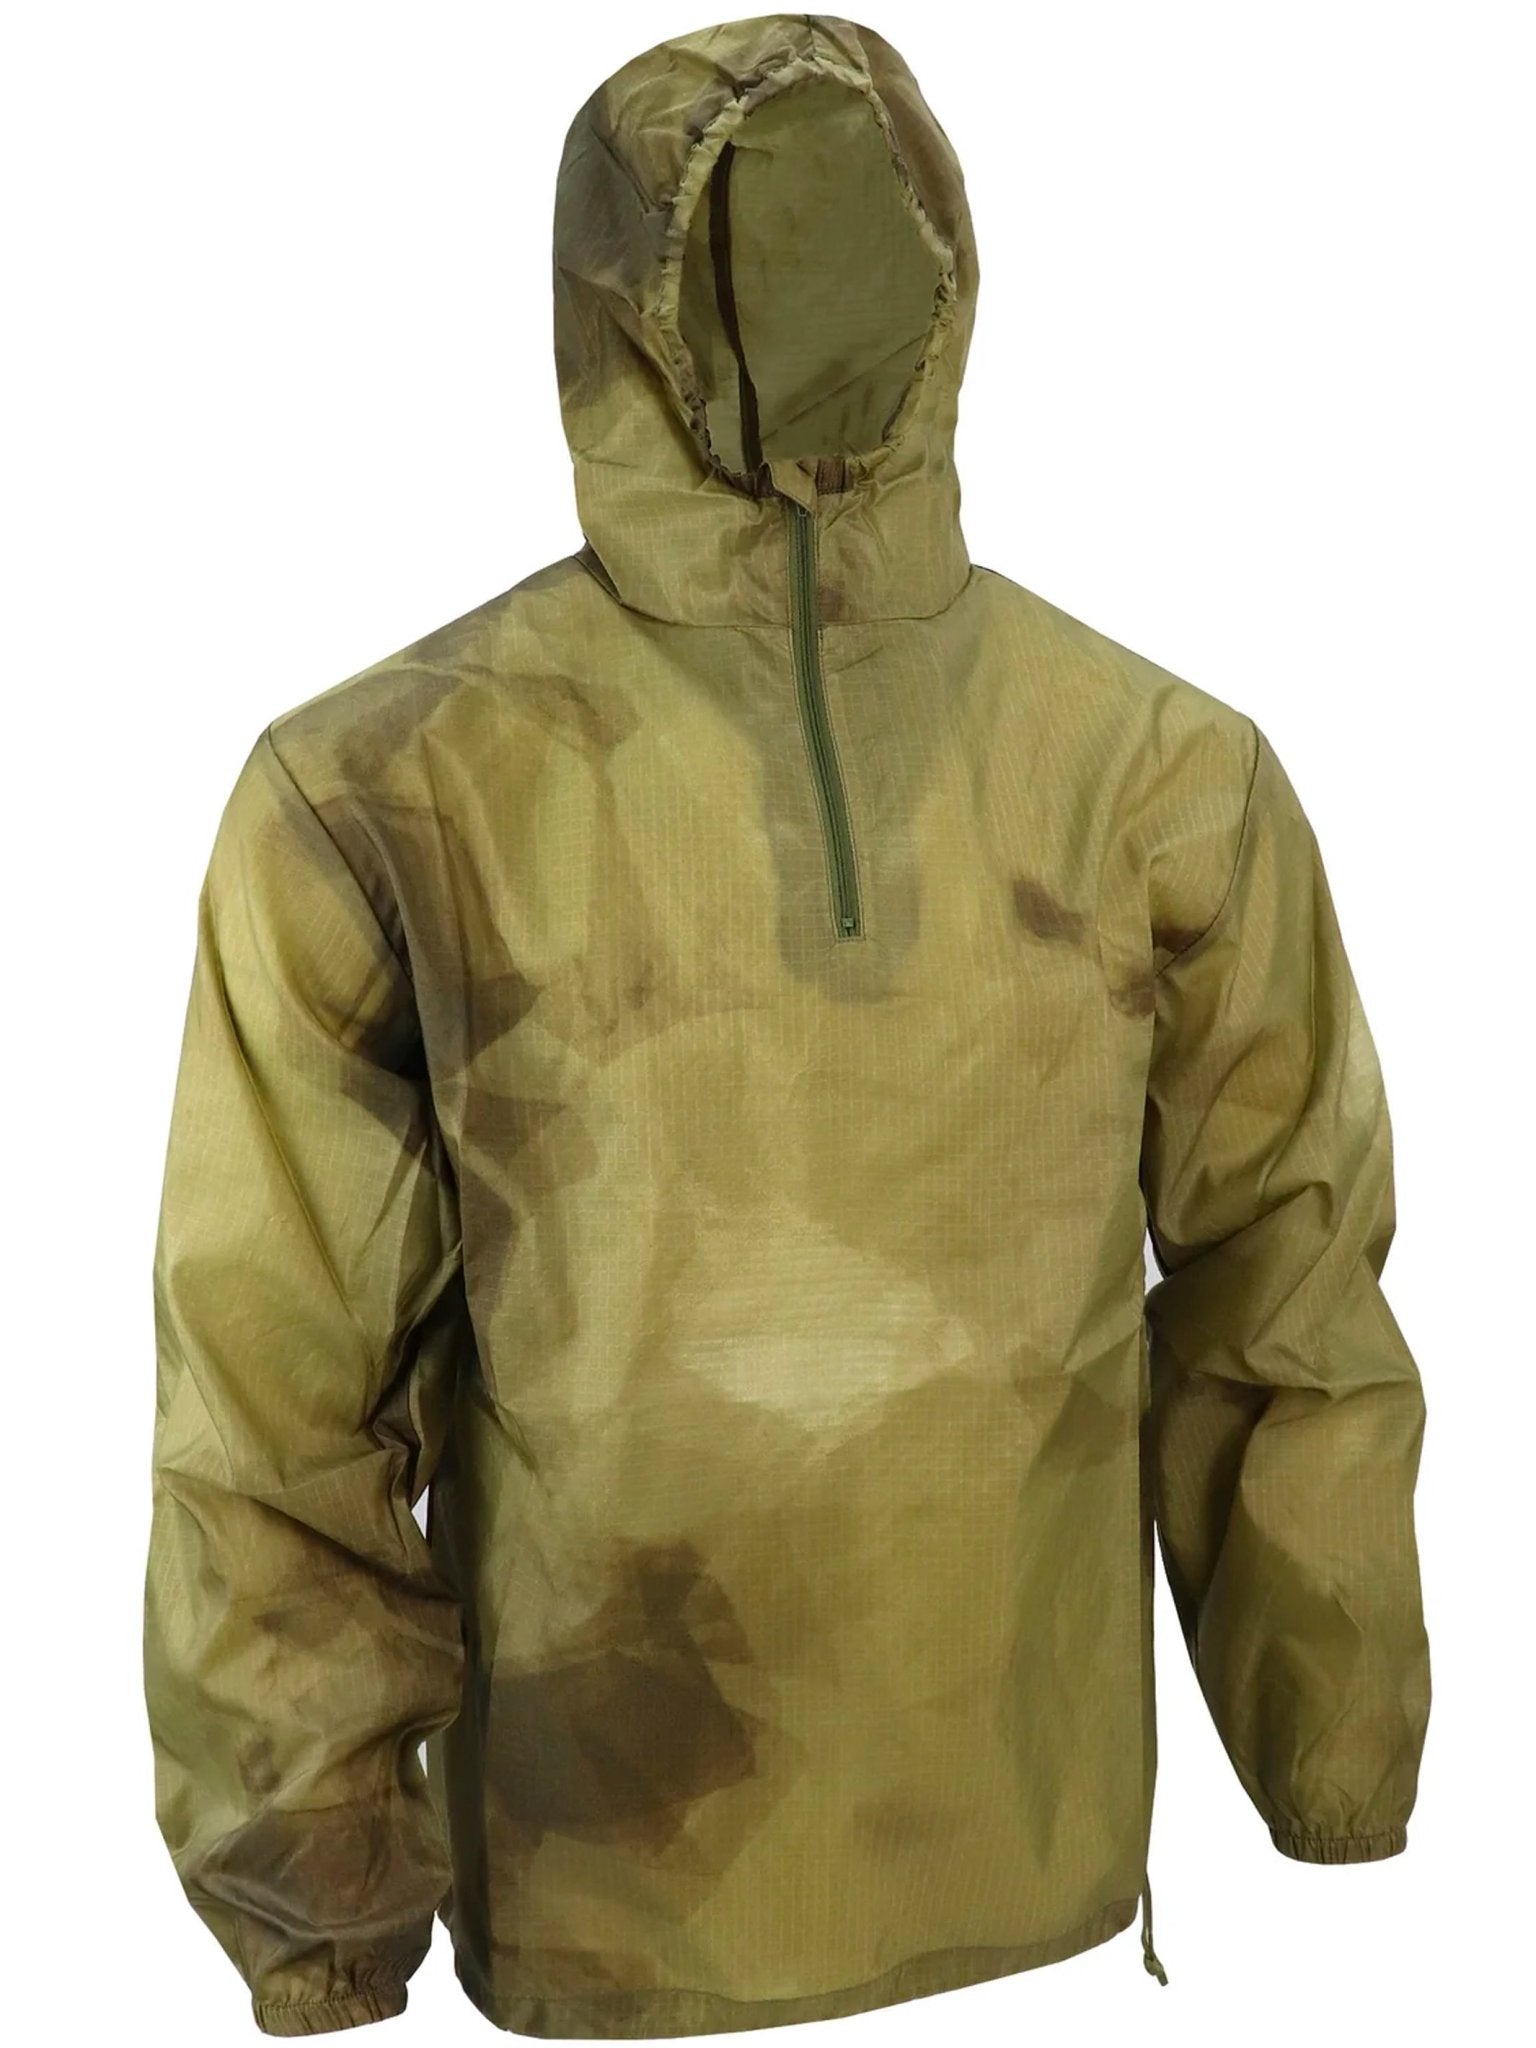 4elementsclothingArktisArktis - A192 Water & wind resistant - STOWAWAY SHIRT / packable jacketOuterwearA192-XS-OPTI